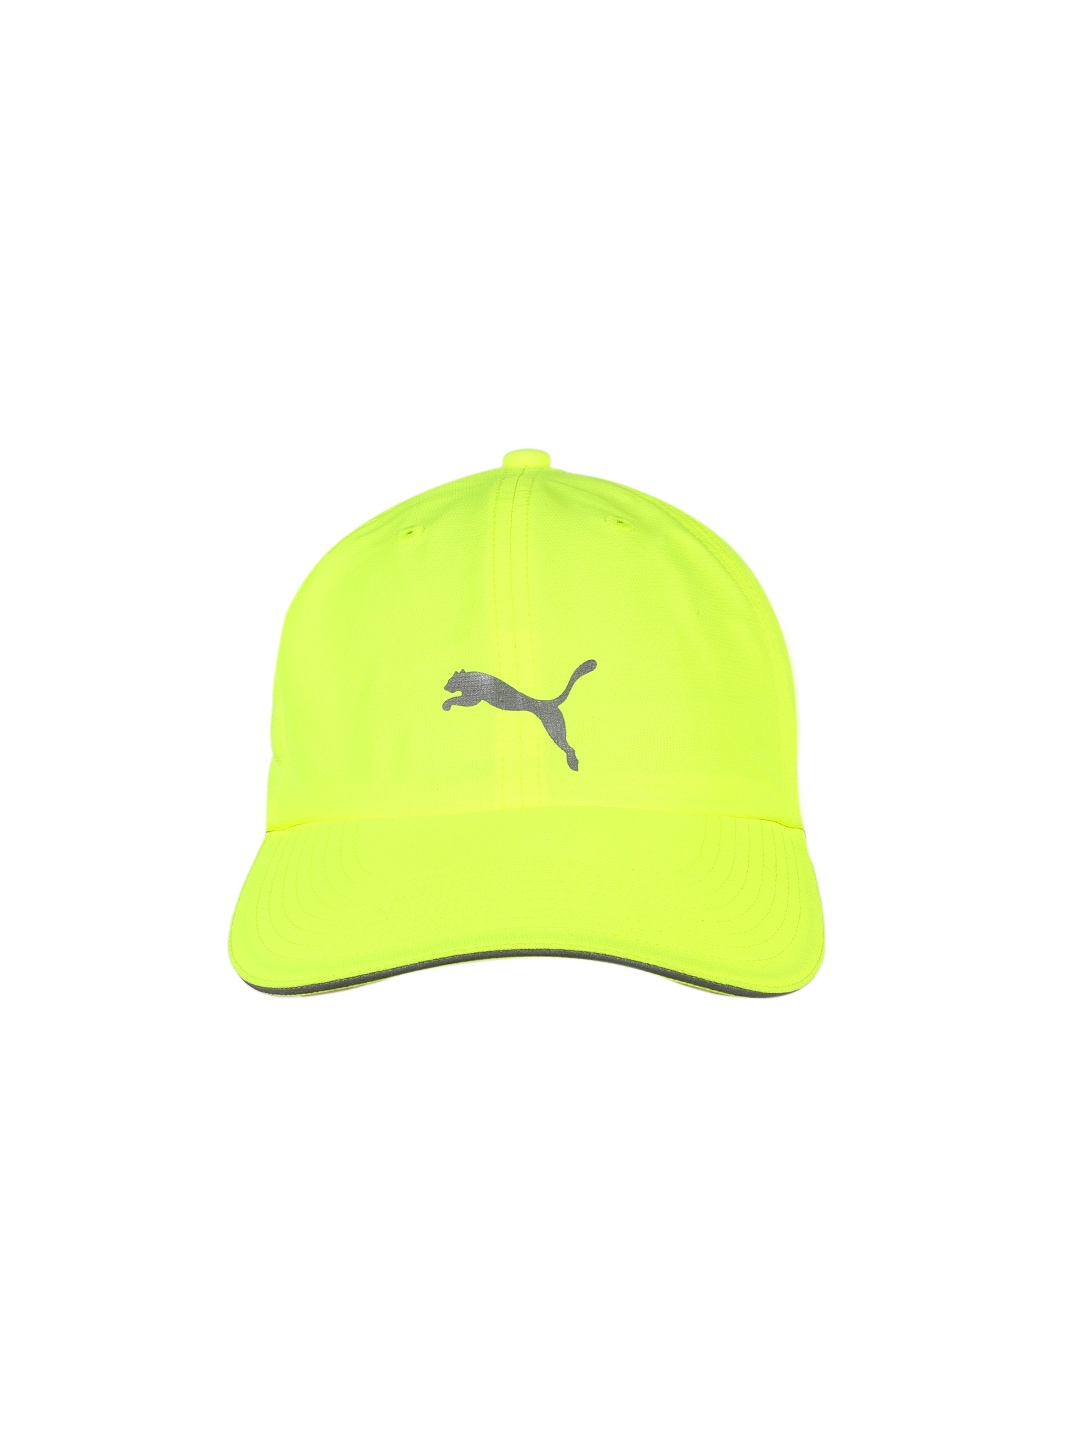 Puma Unisex Fluorescent Green Solid Baseball Cap Price in India